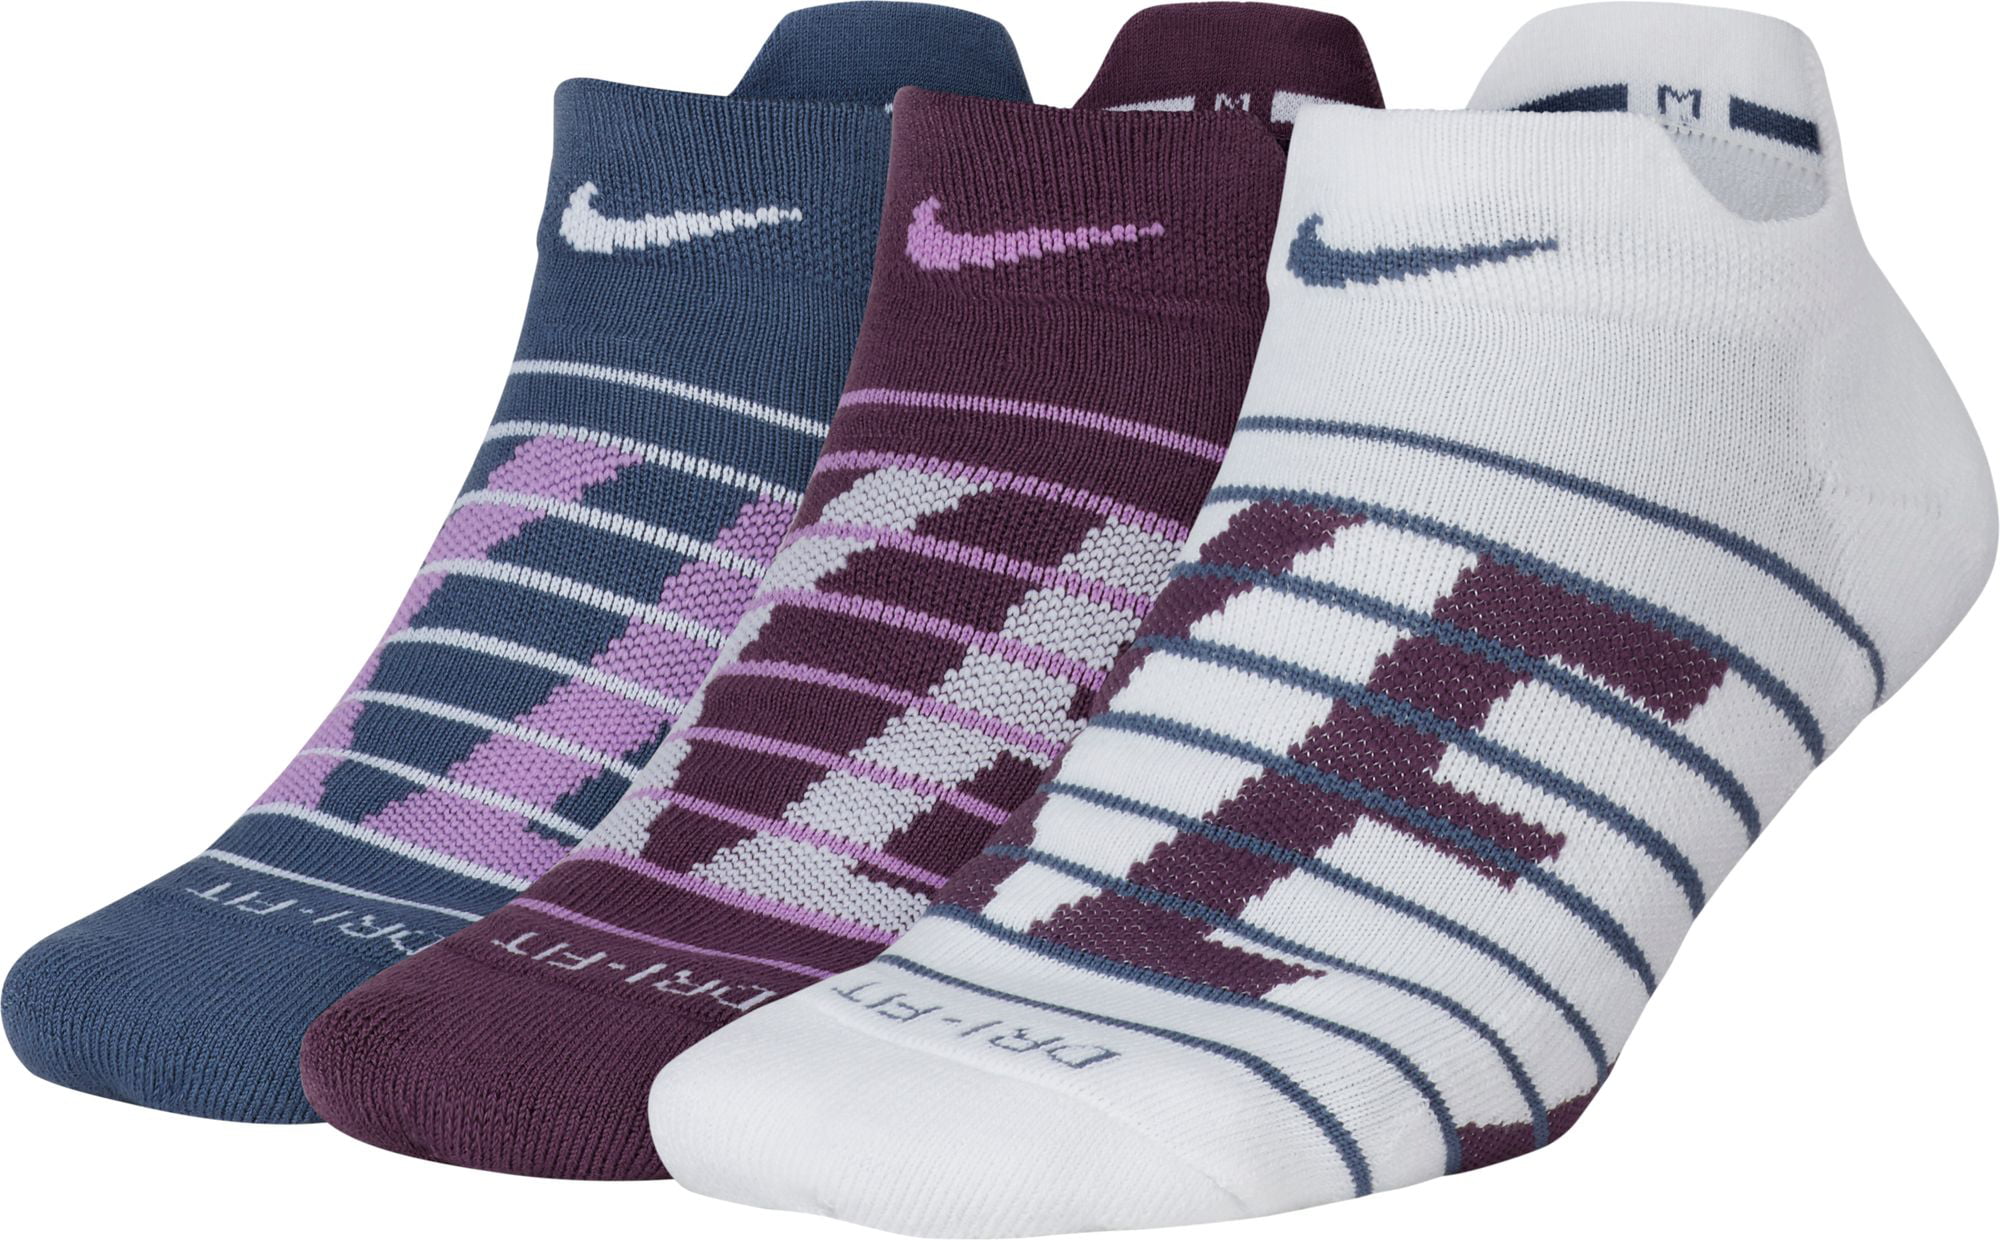 Nike - Nike Women's Dry Cushion Low Cut Training Socks 3 Pack - Walmart ...